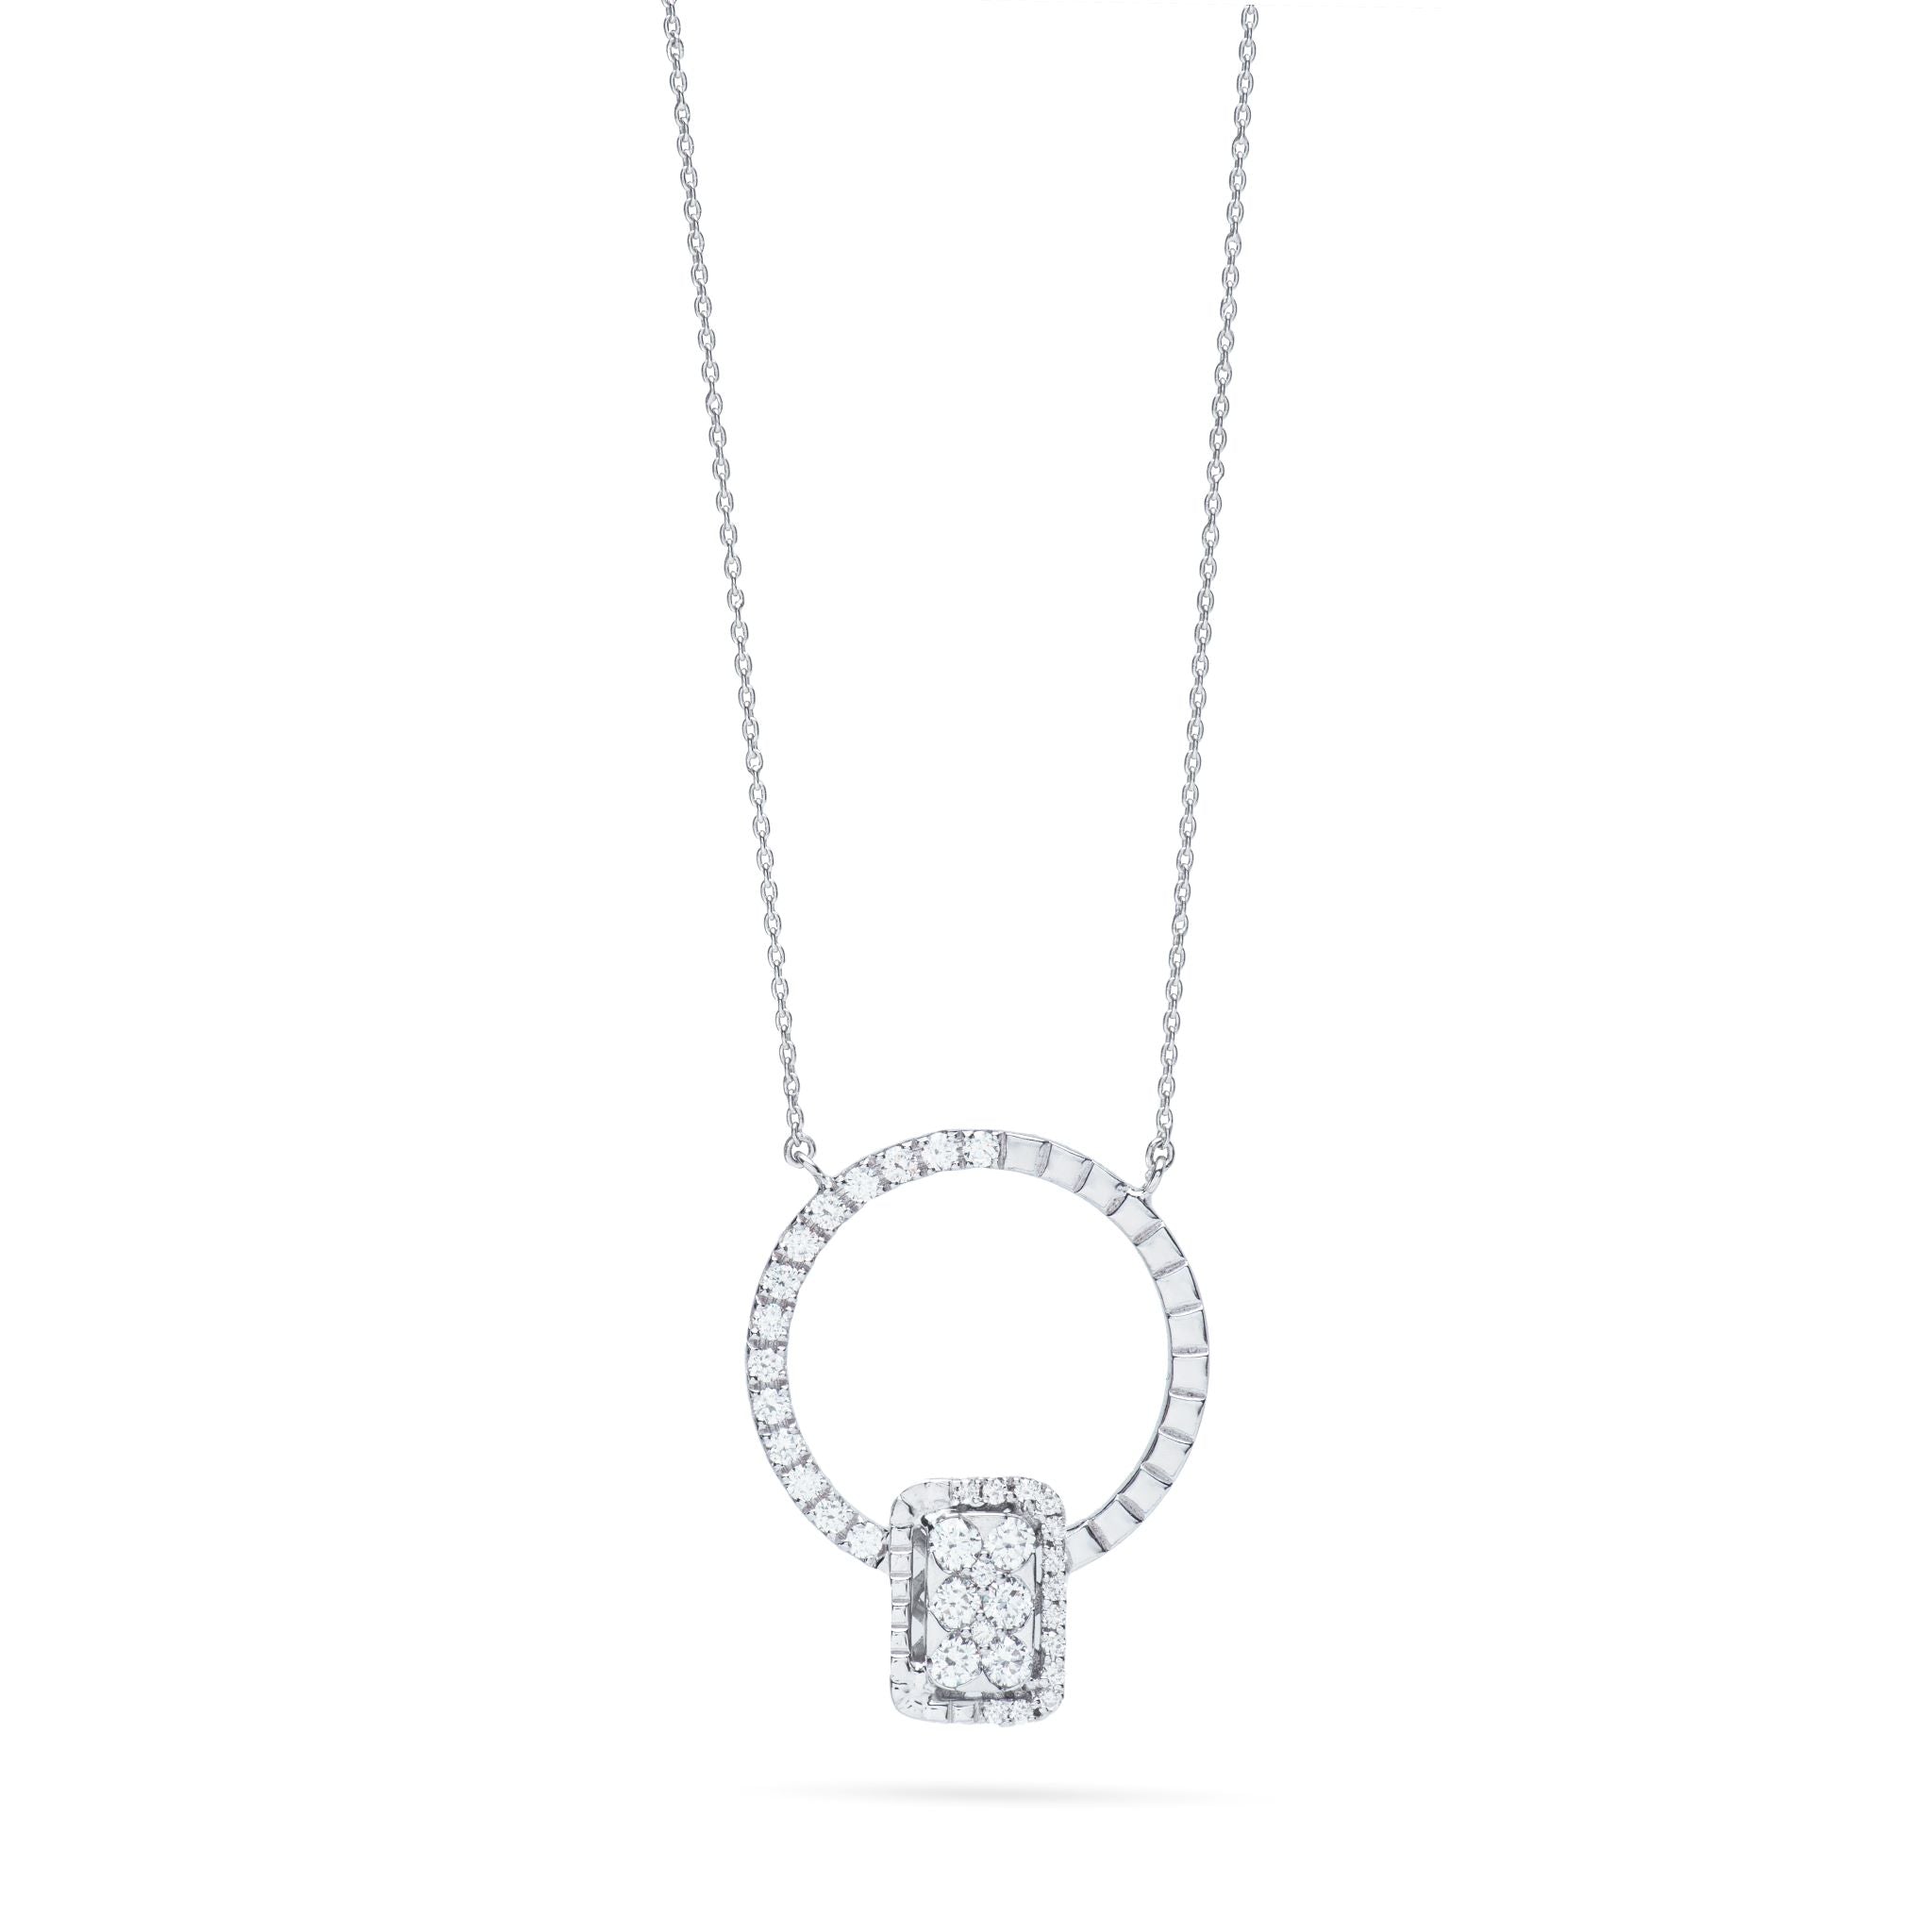 Centeral Diamond Piece necklace in white 18K Gold - S-PN007S